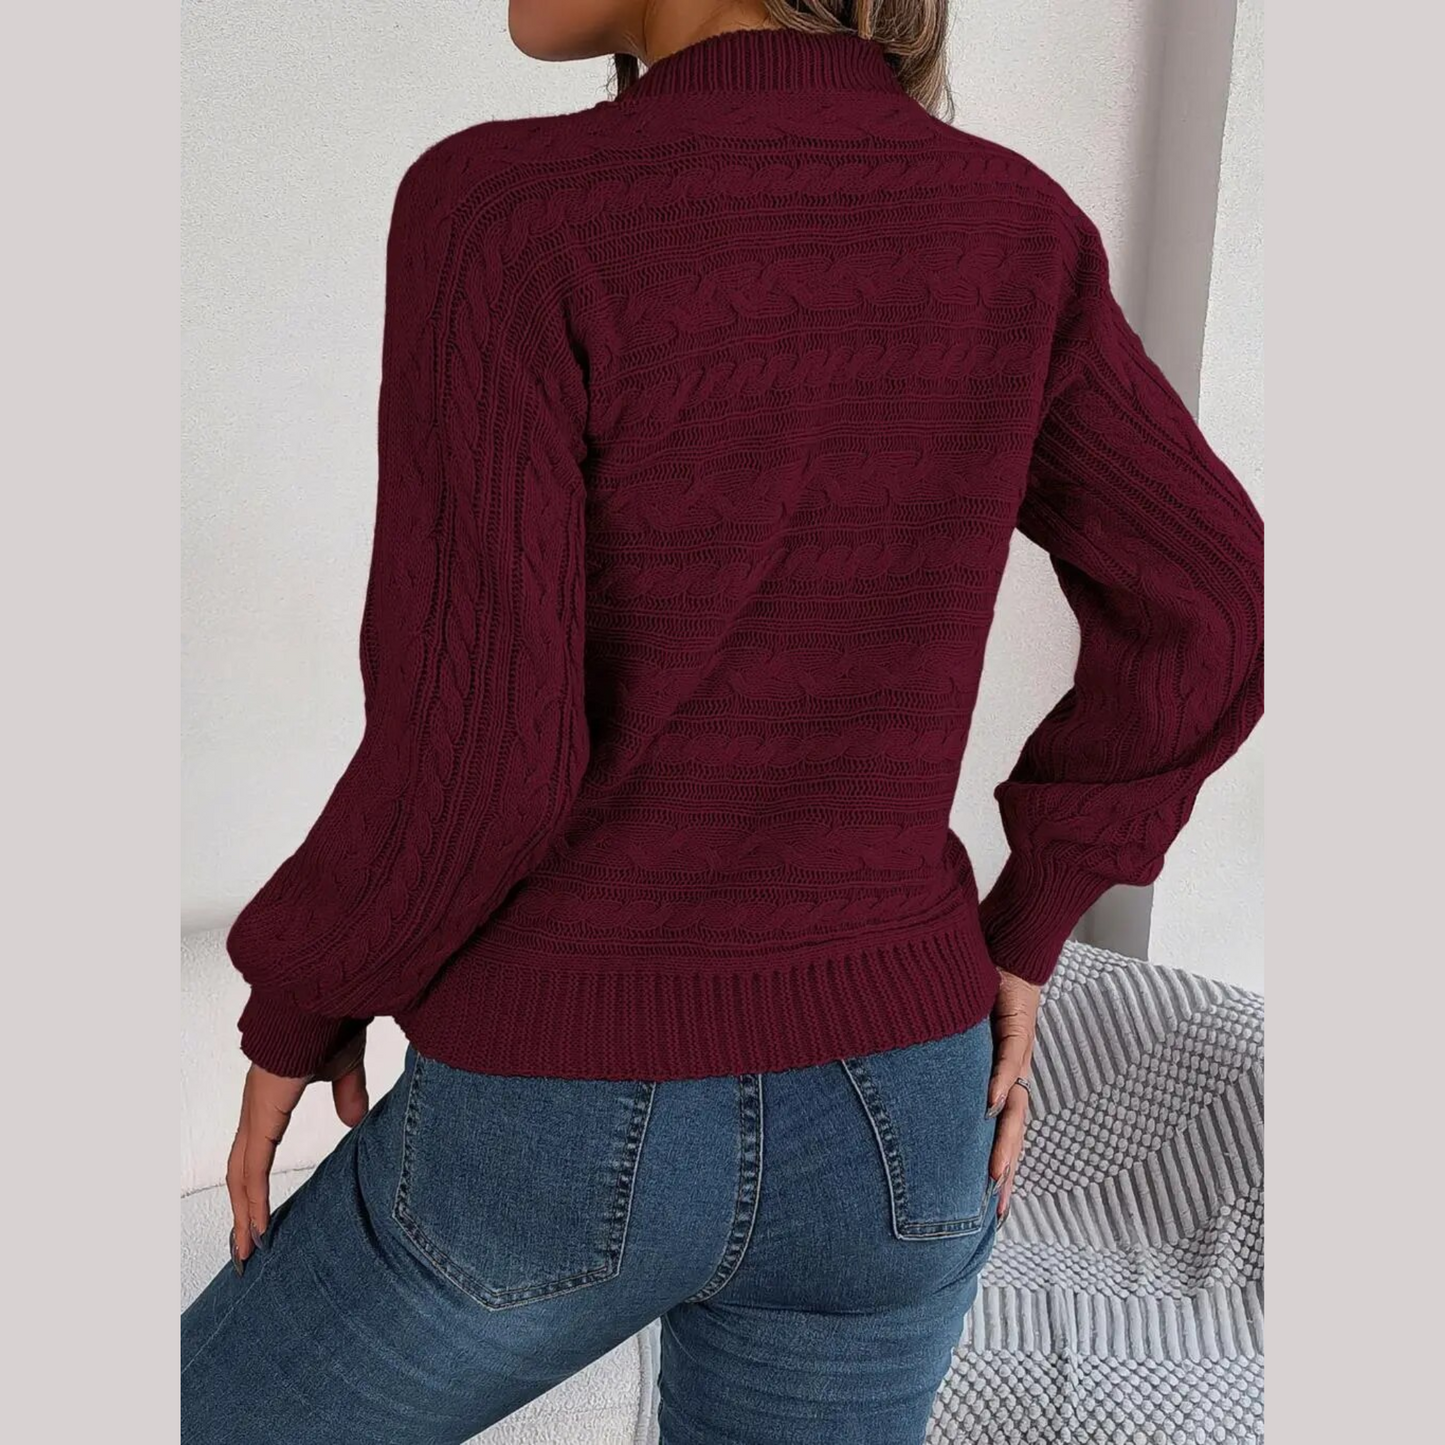 Tina - Burgundy Twist Knit Cutout Sweater Top